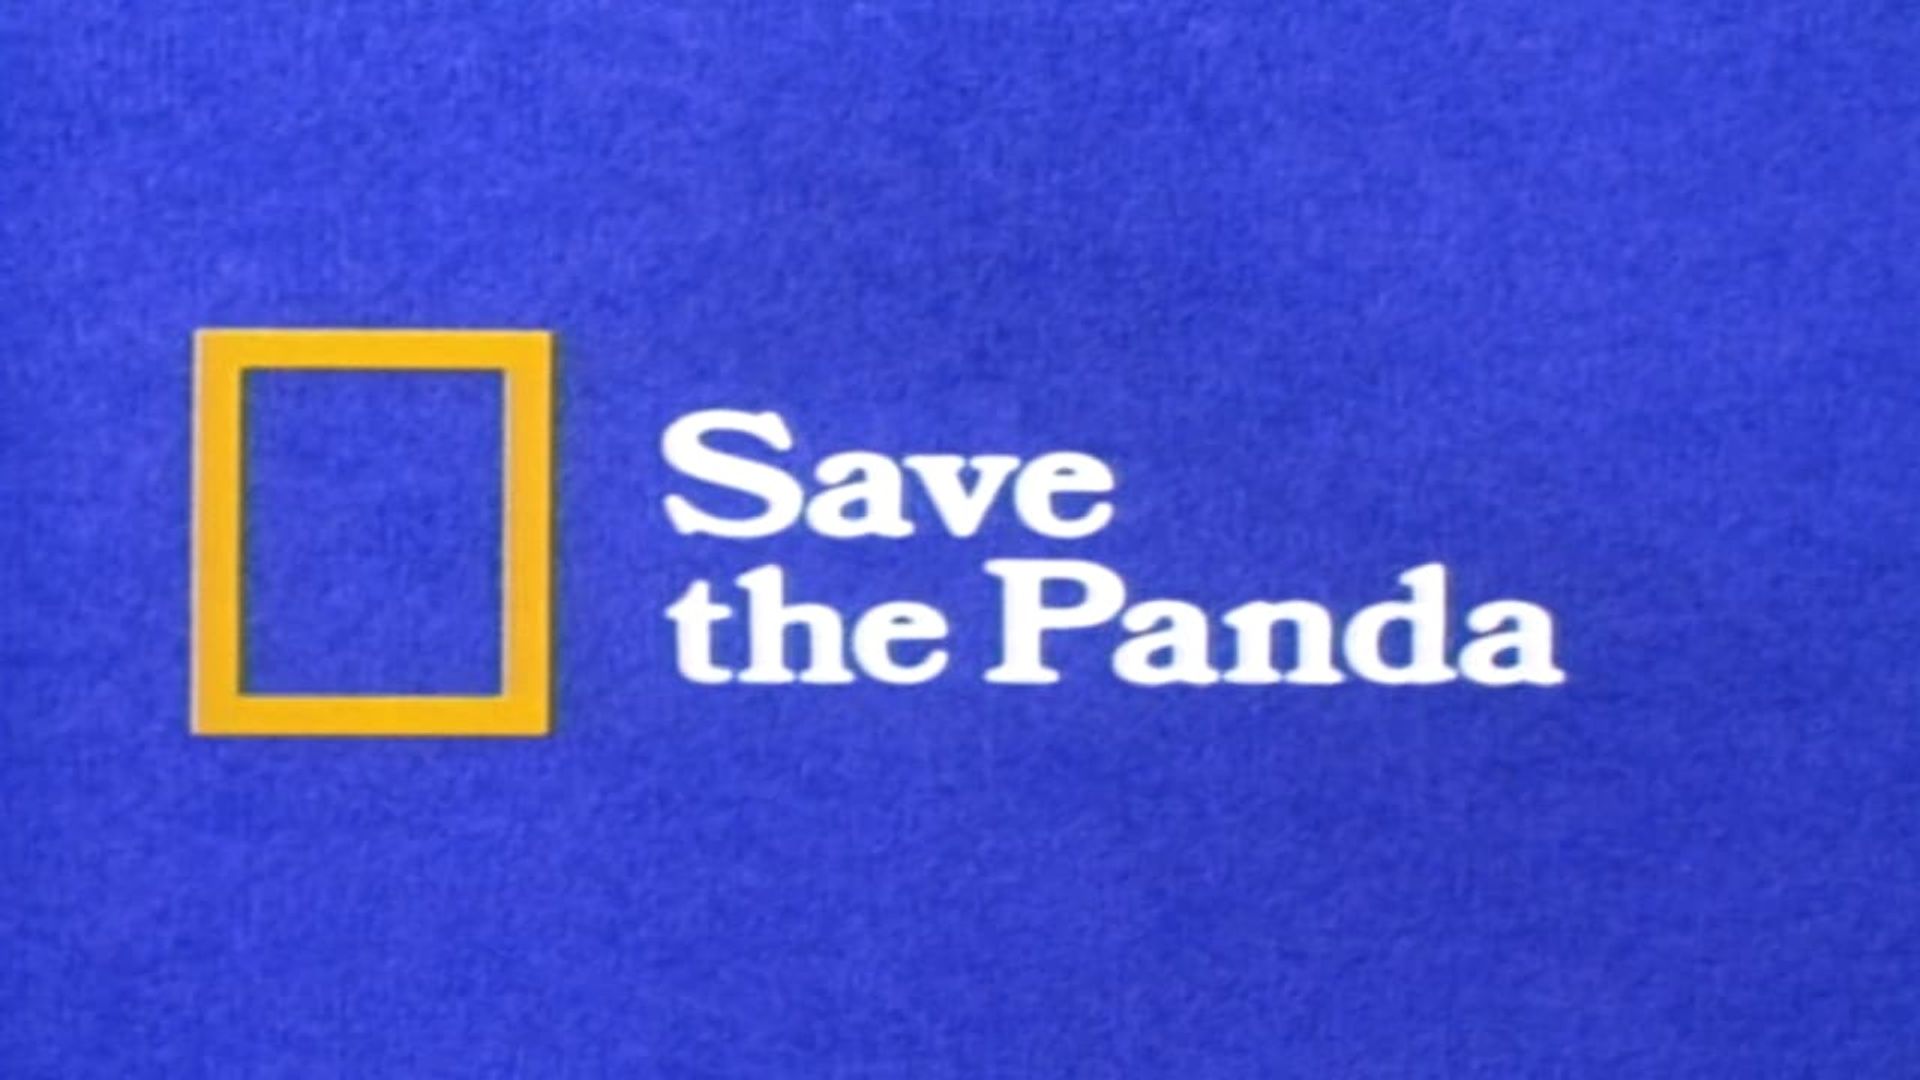 Save the Panda background